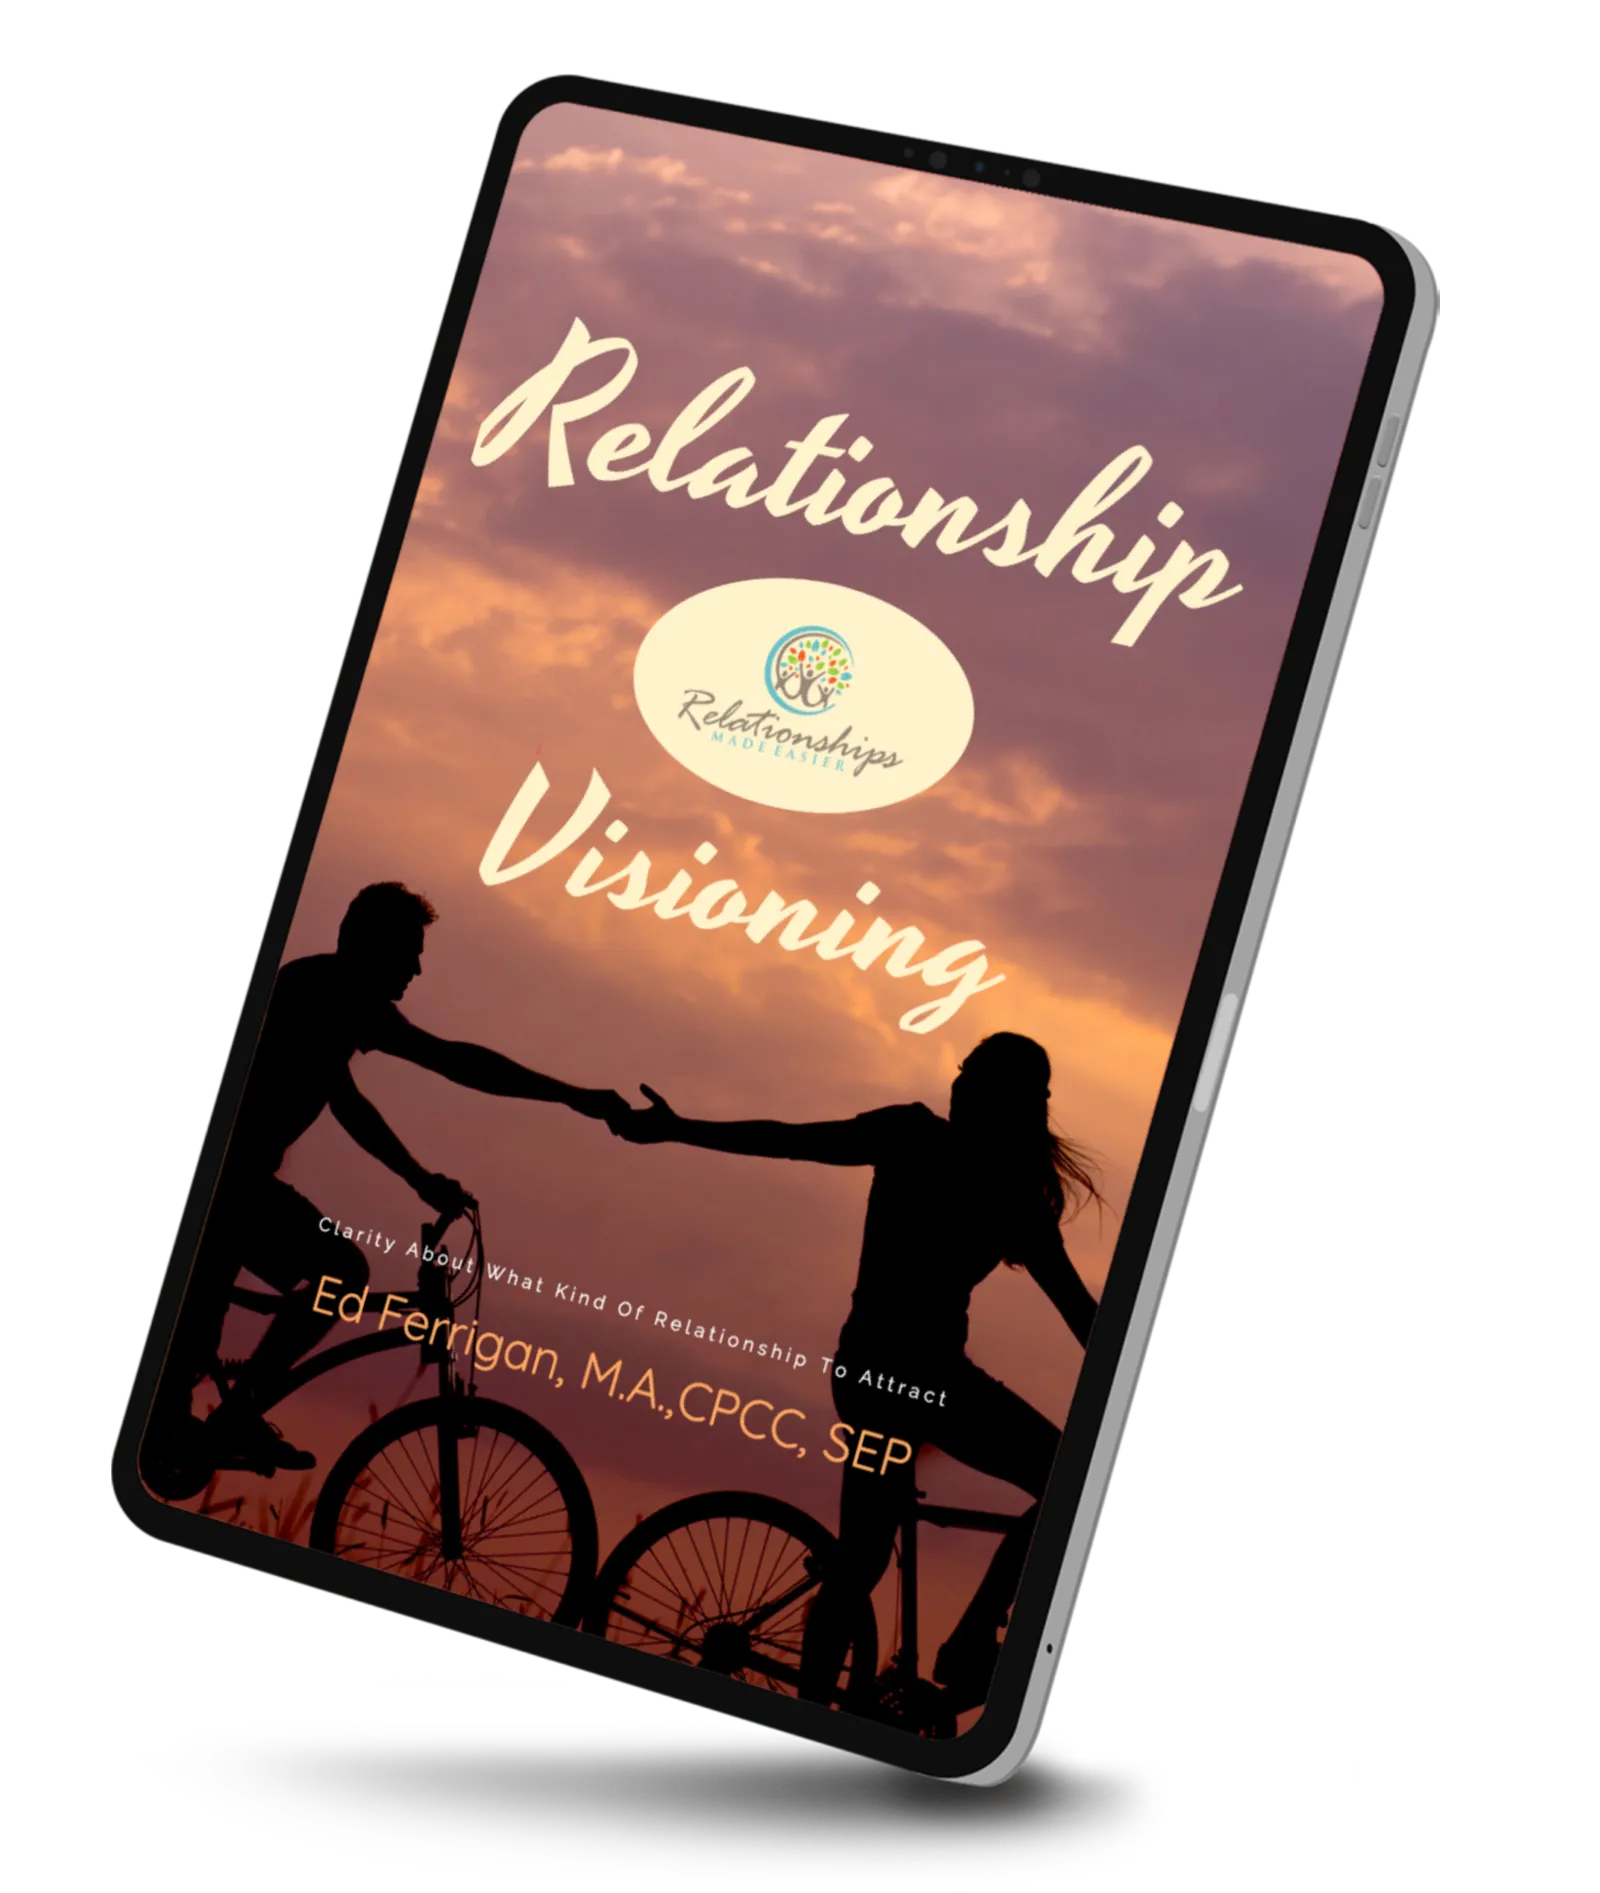 Relationship Visioning Image